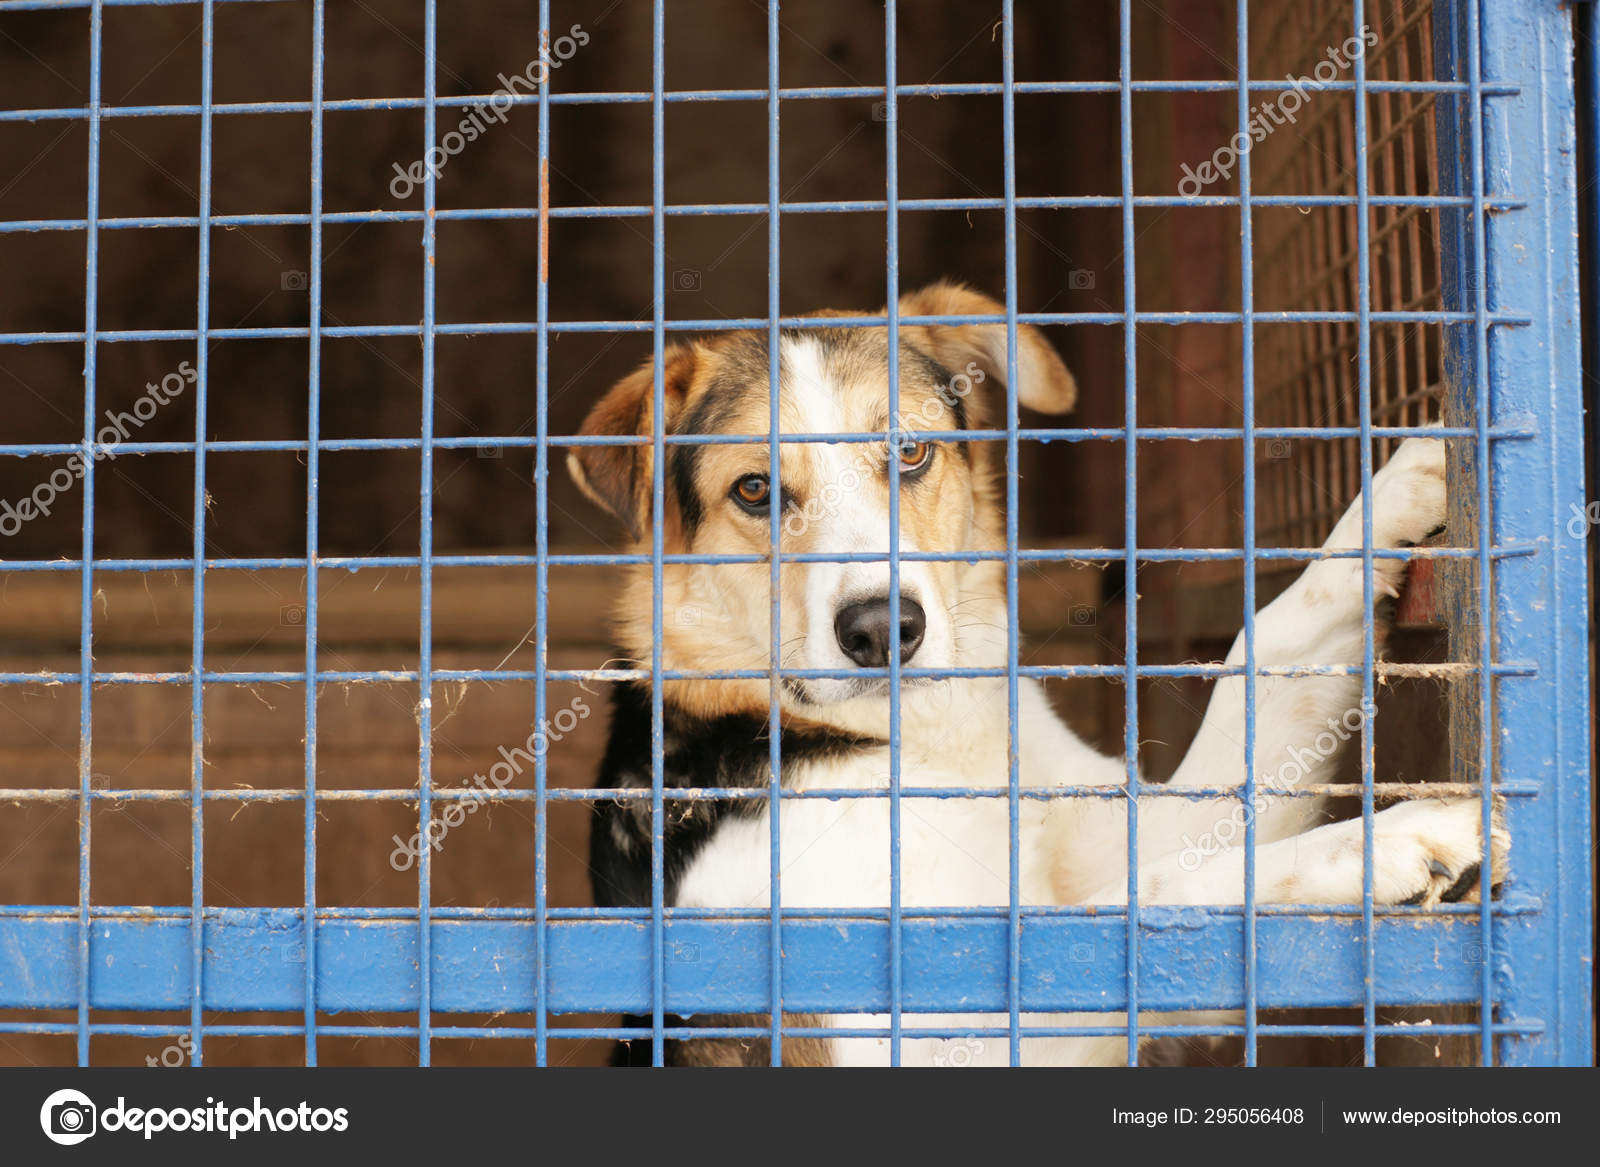 Niedlicher Obdachloser Hund Kafig Stockfotografie Lizenzfreie Fotos C Oliveshadow Depositphotos